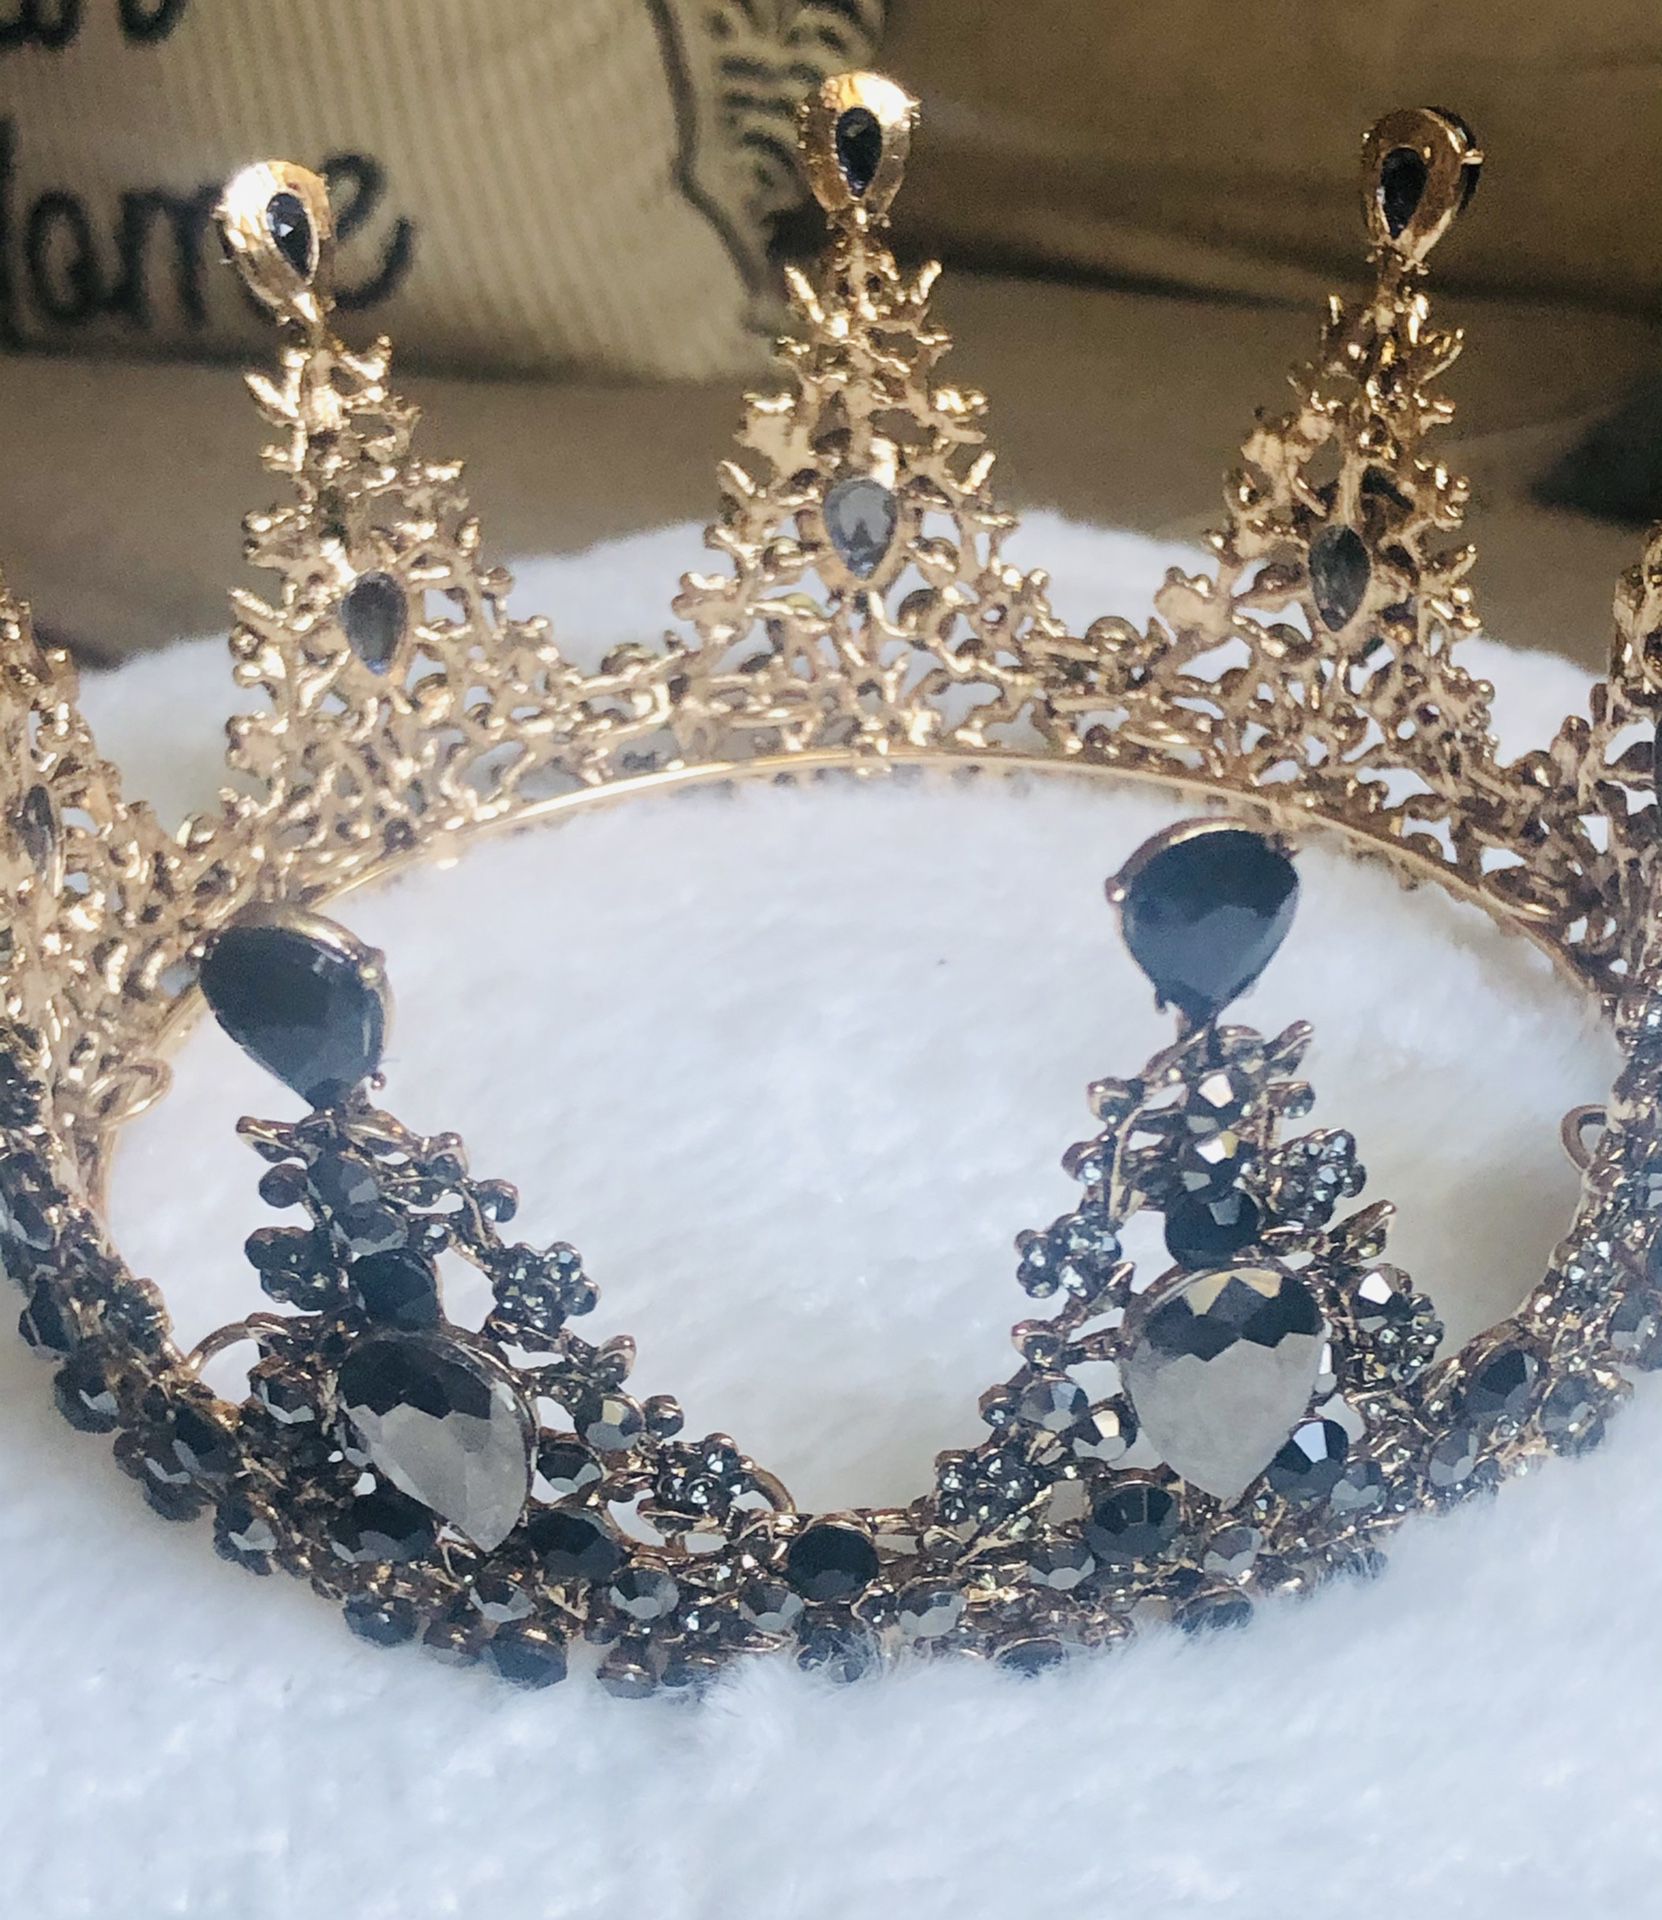 Gorgeous Crown!!!